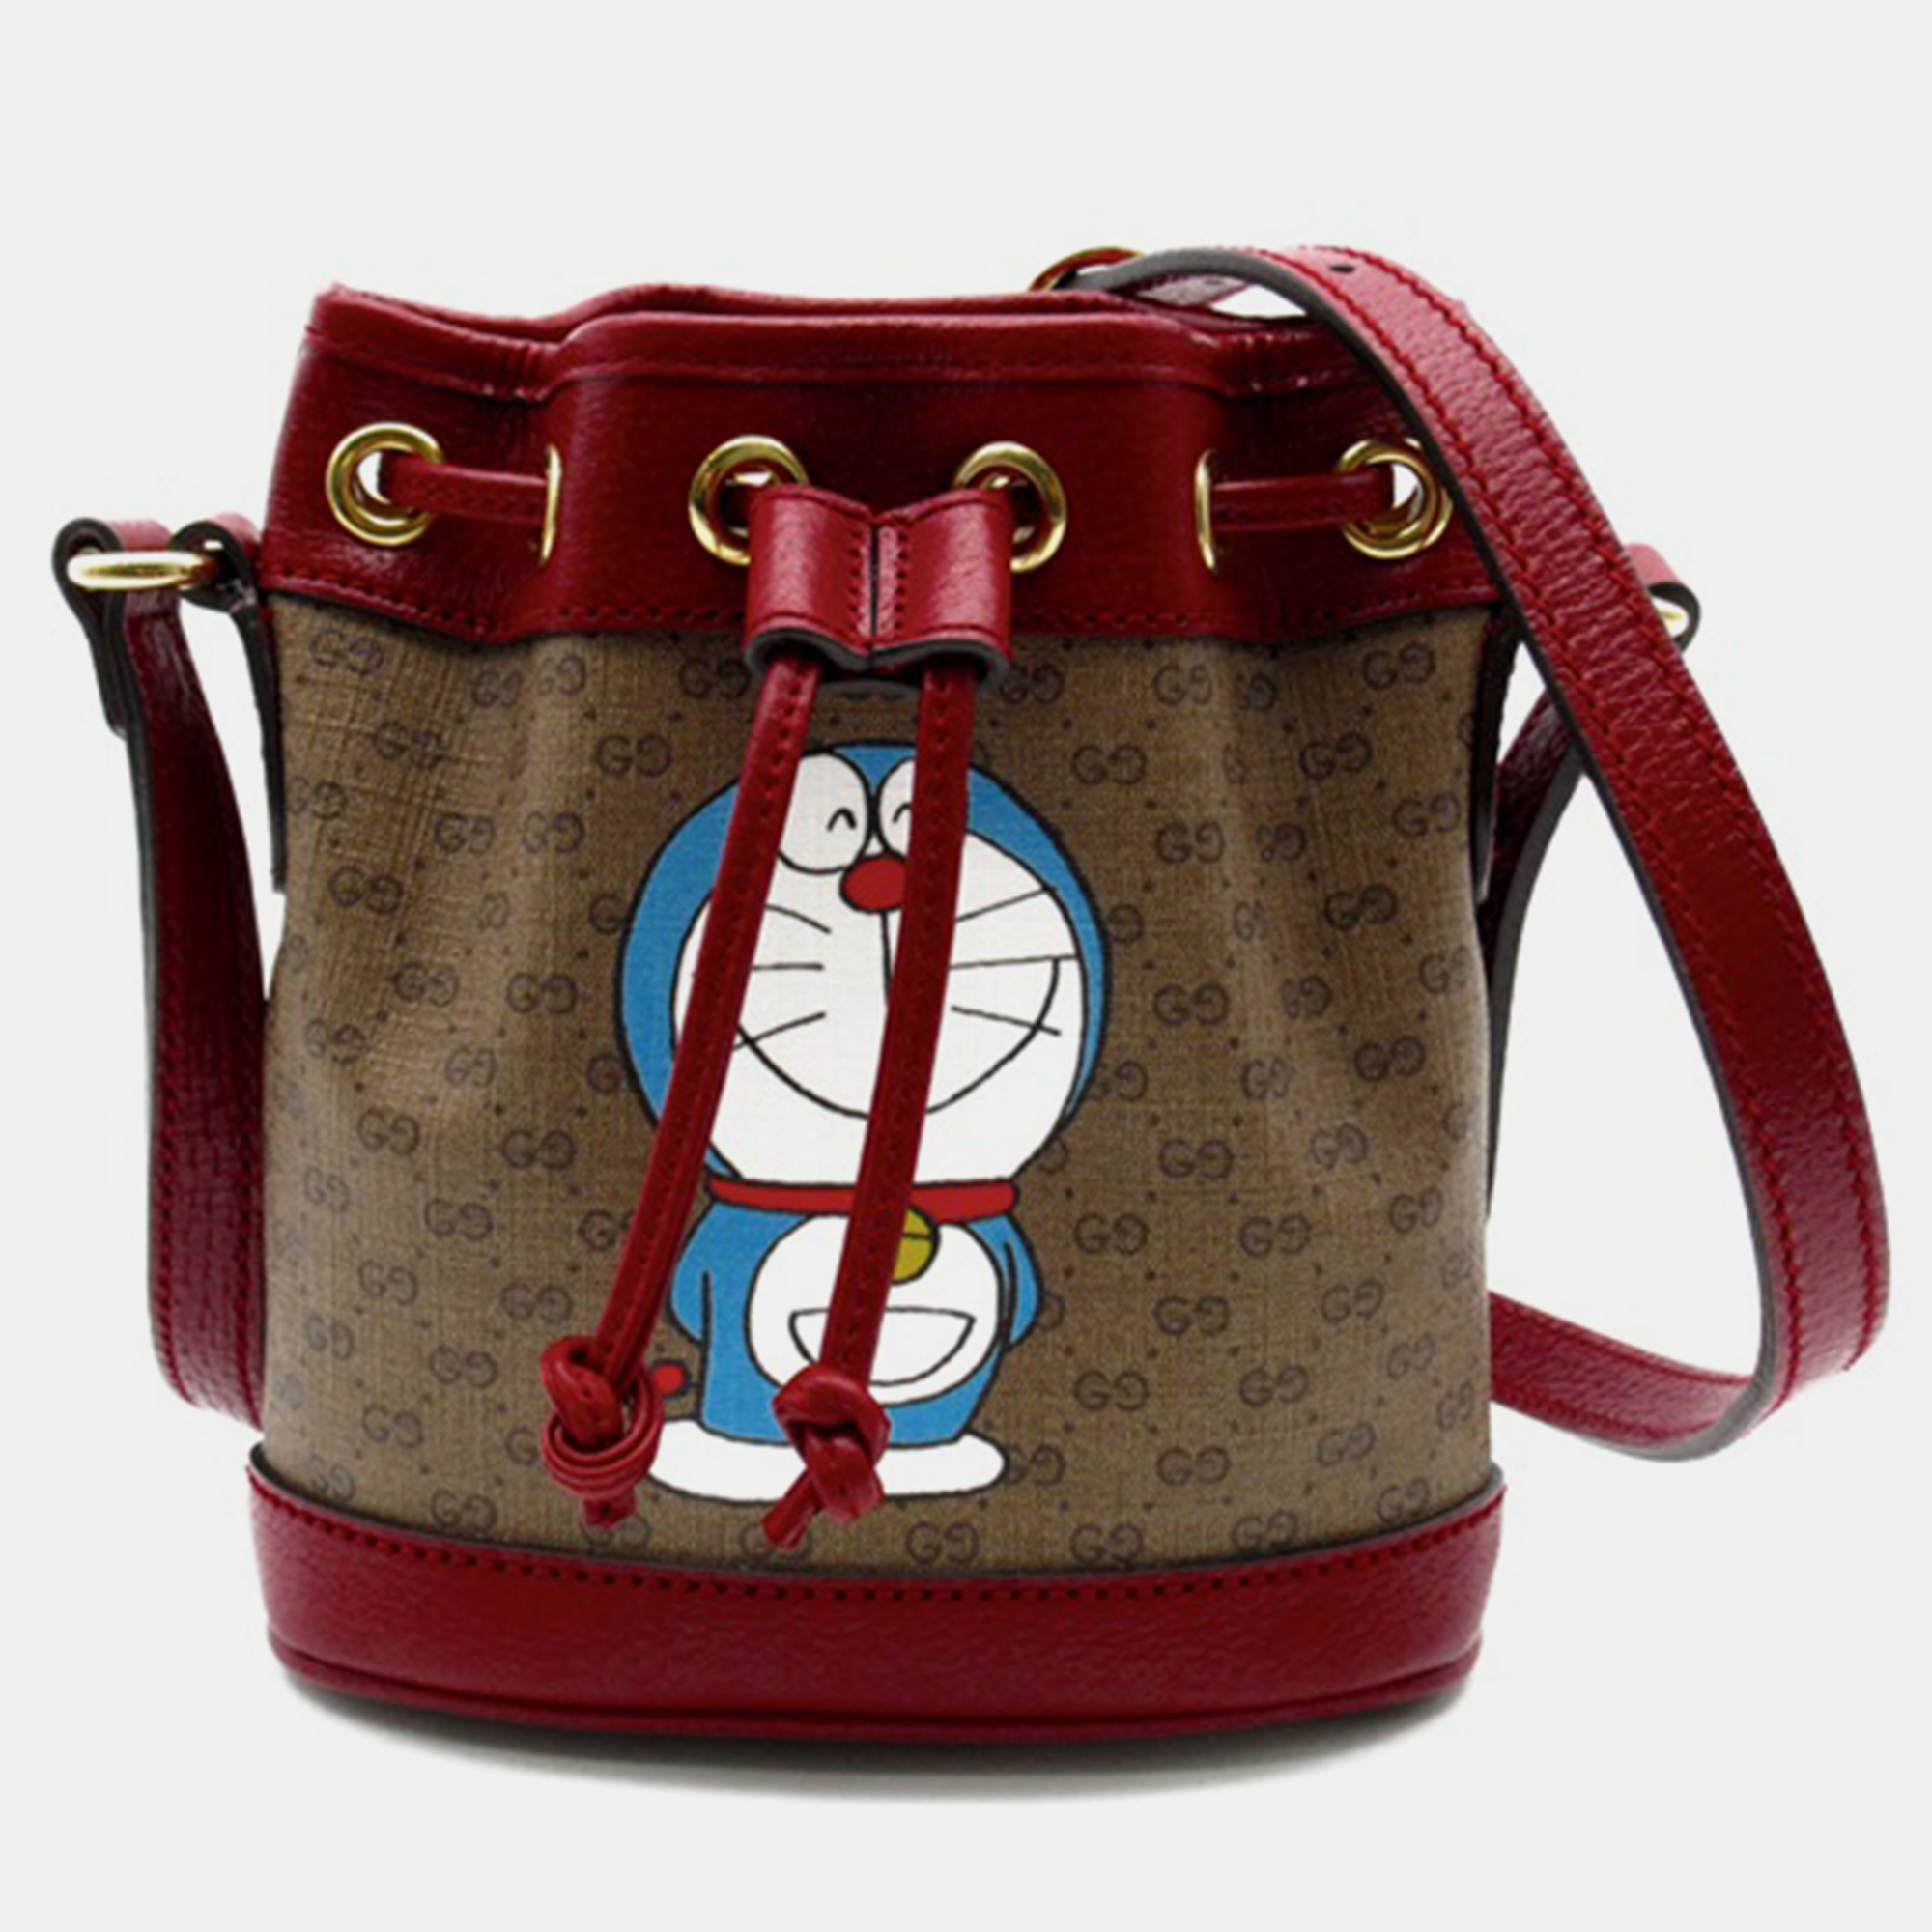 Gucci red leather x doraemon bucket bag